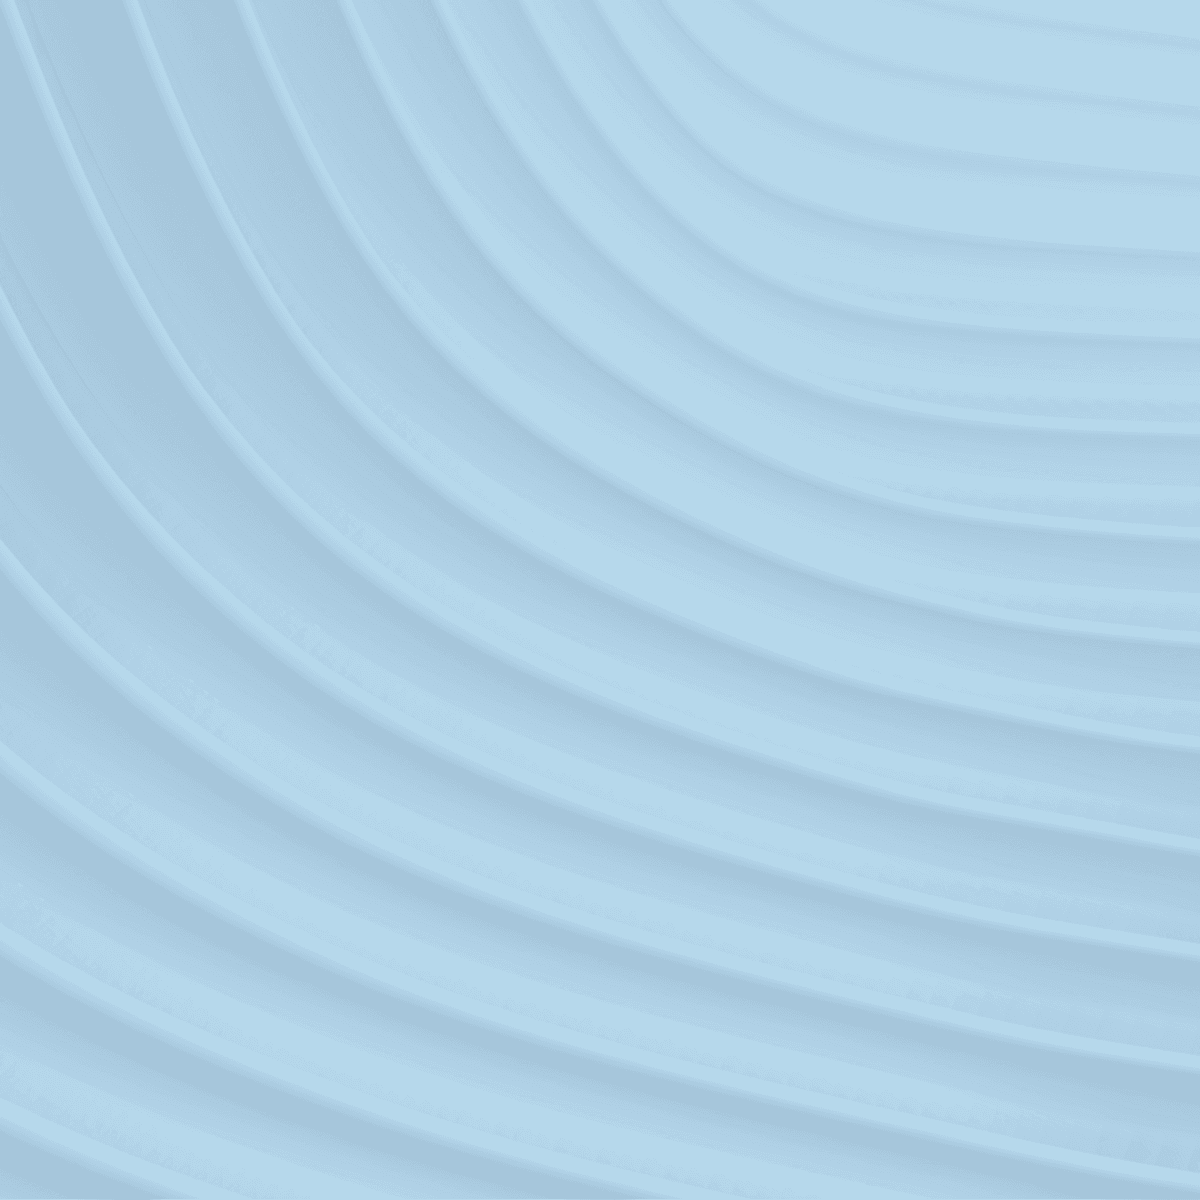 Abstract Blue Gray Ridges